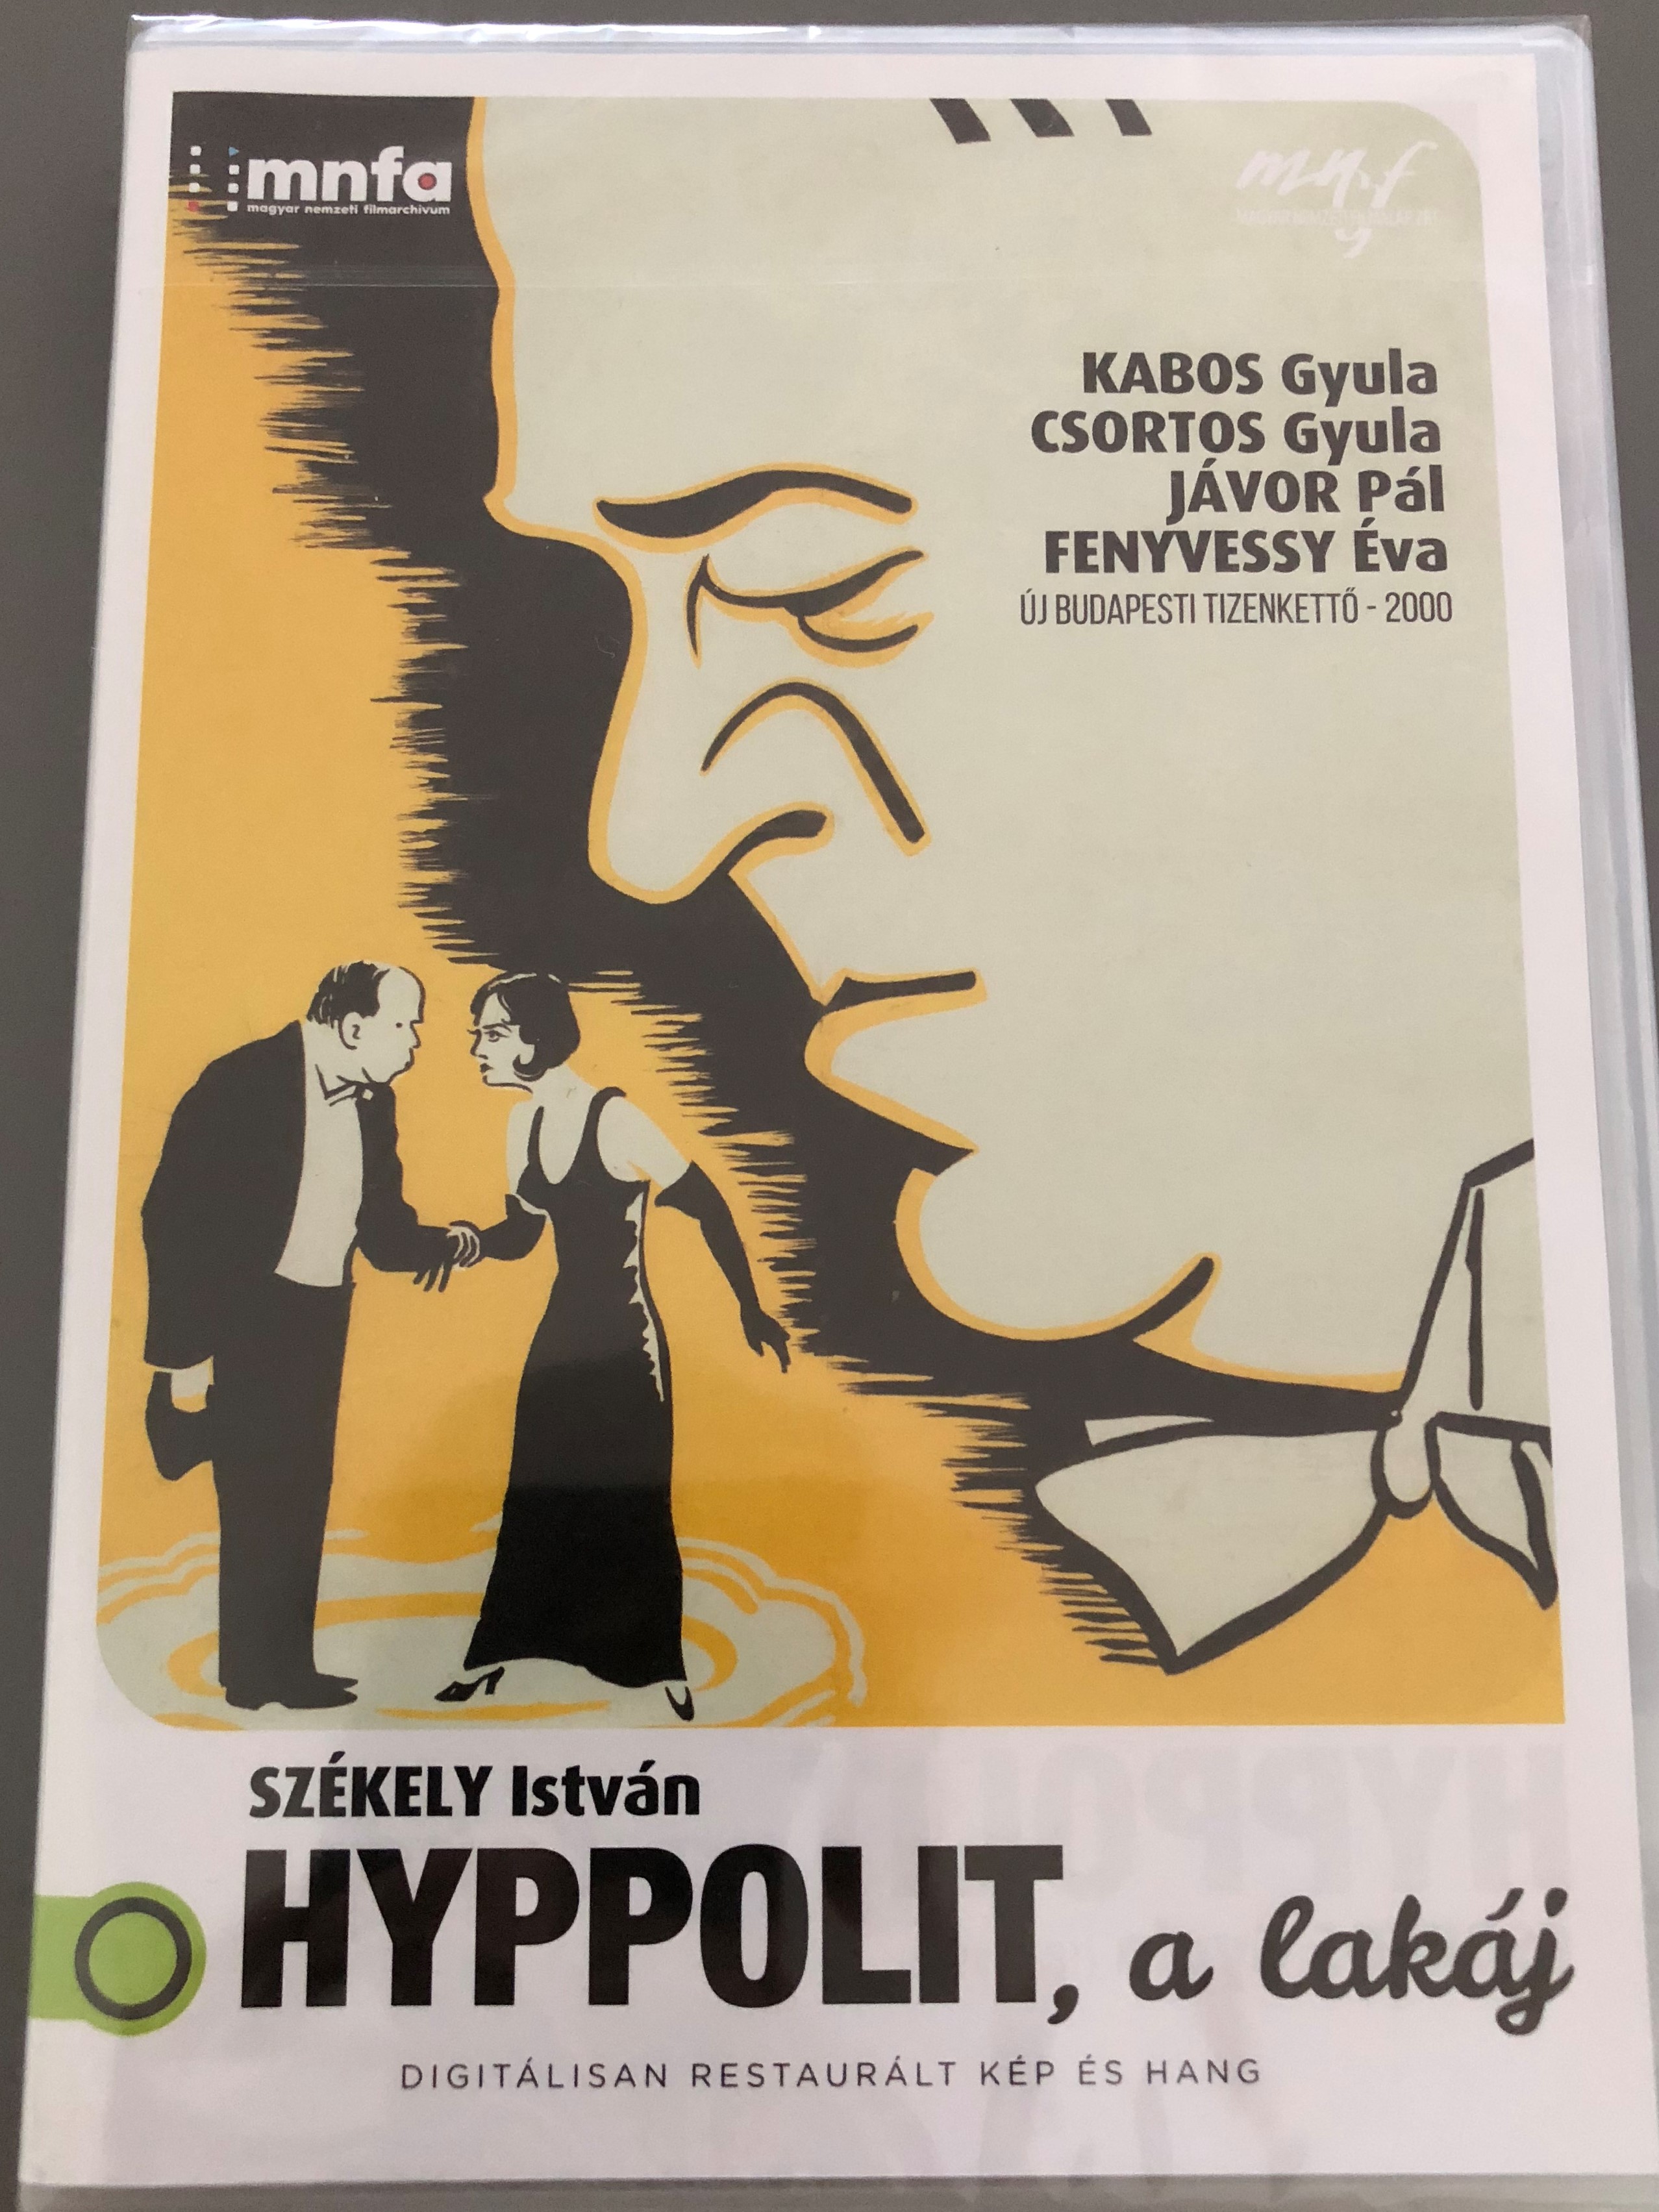 hyppolit-the-butler-dvd-1931-hyppolit-a-lak-s-directed-by-istv-n-sz-kely-starring-kabos-gyula-csortos-gyula-j-vor-p-l-fenyvessy-va-digit-lisan-restaur-lt-k-p-s-hang-1-.jpg